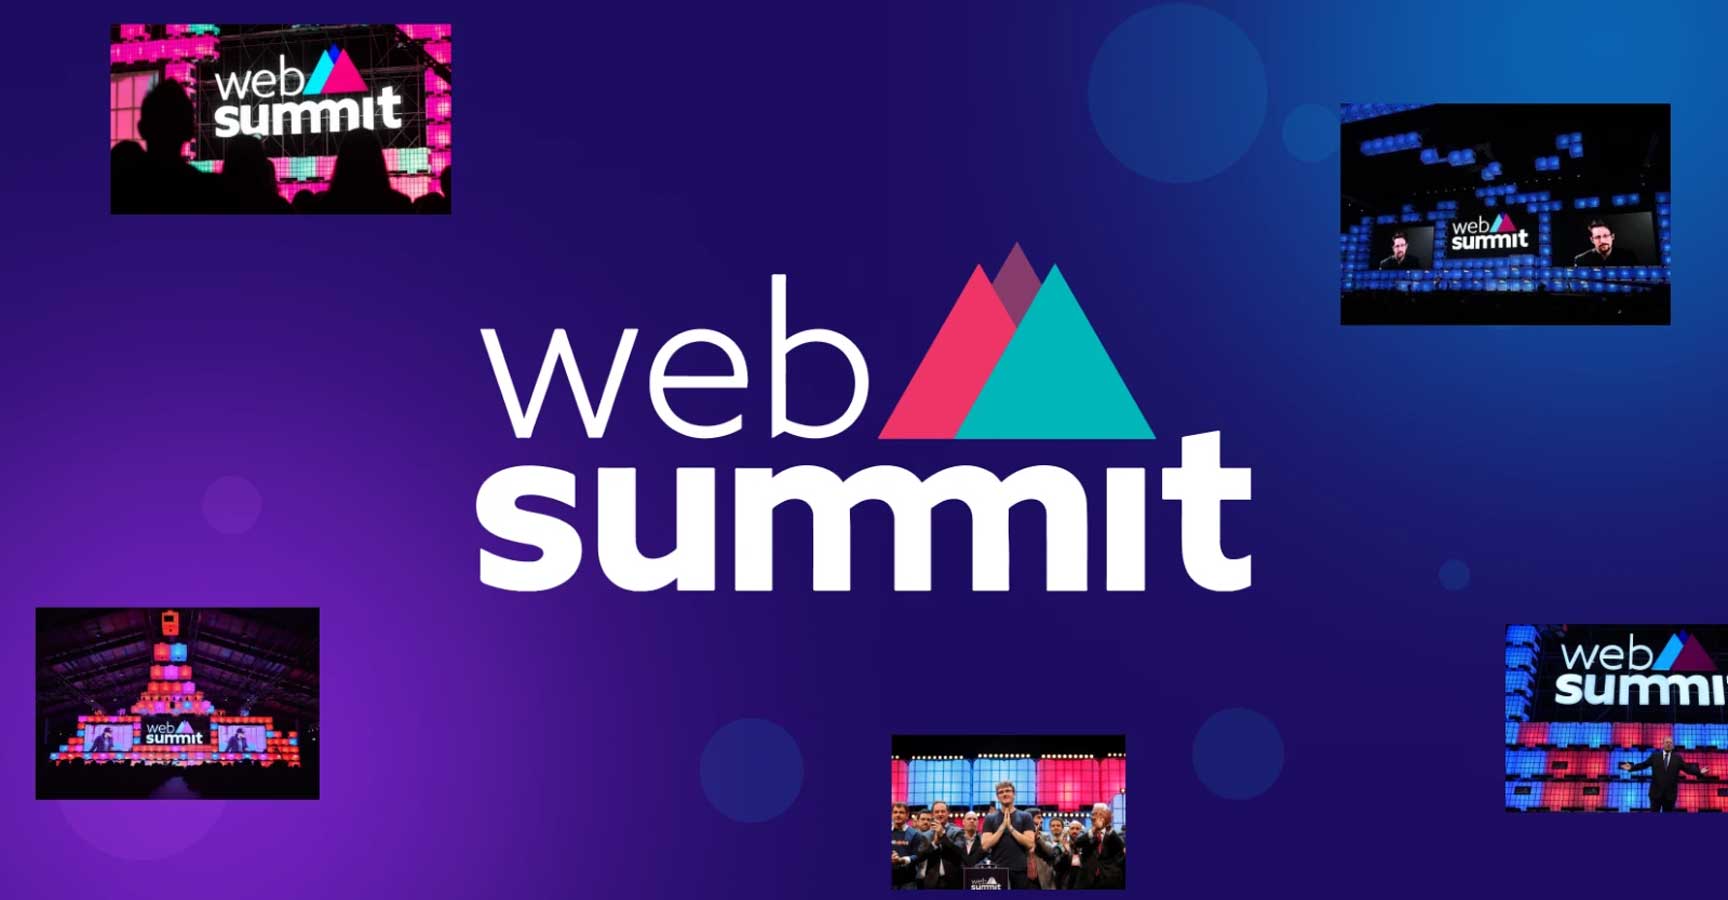 Web Summit of Lisbonne